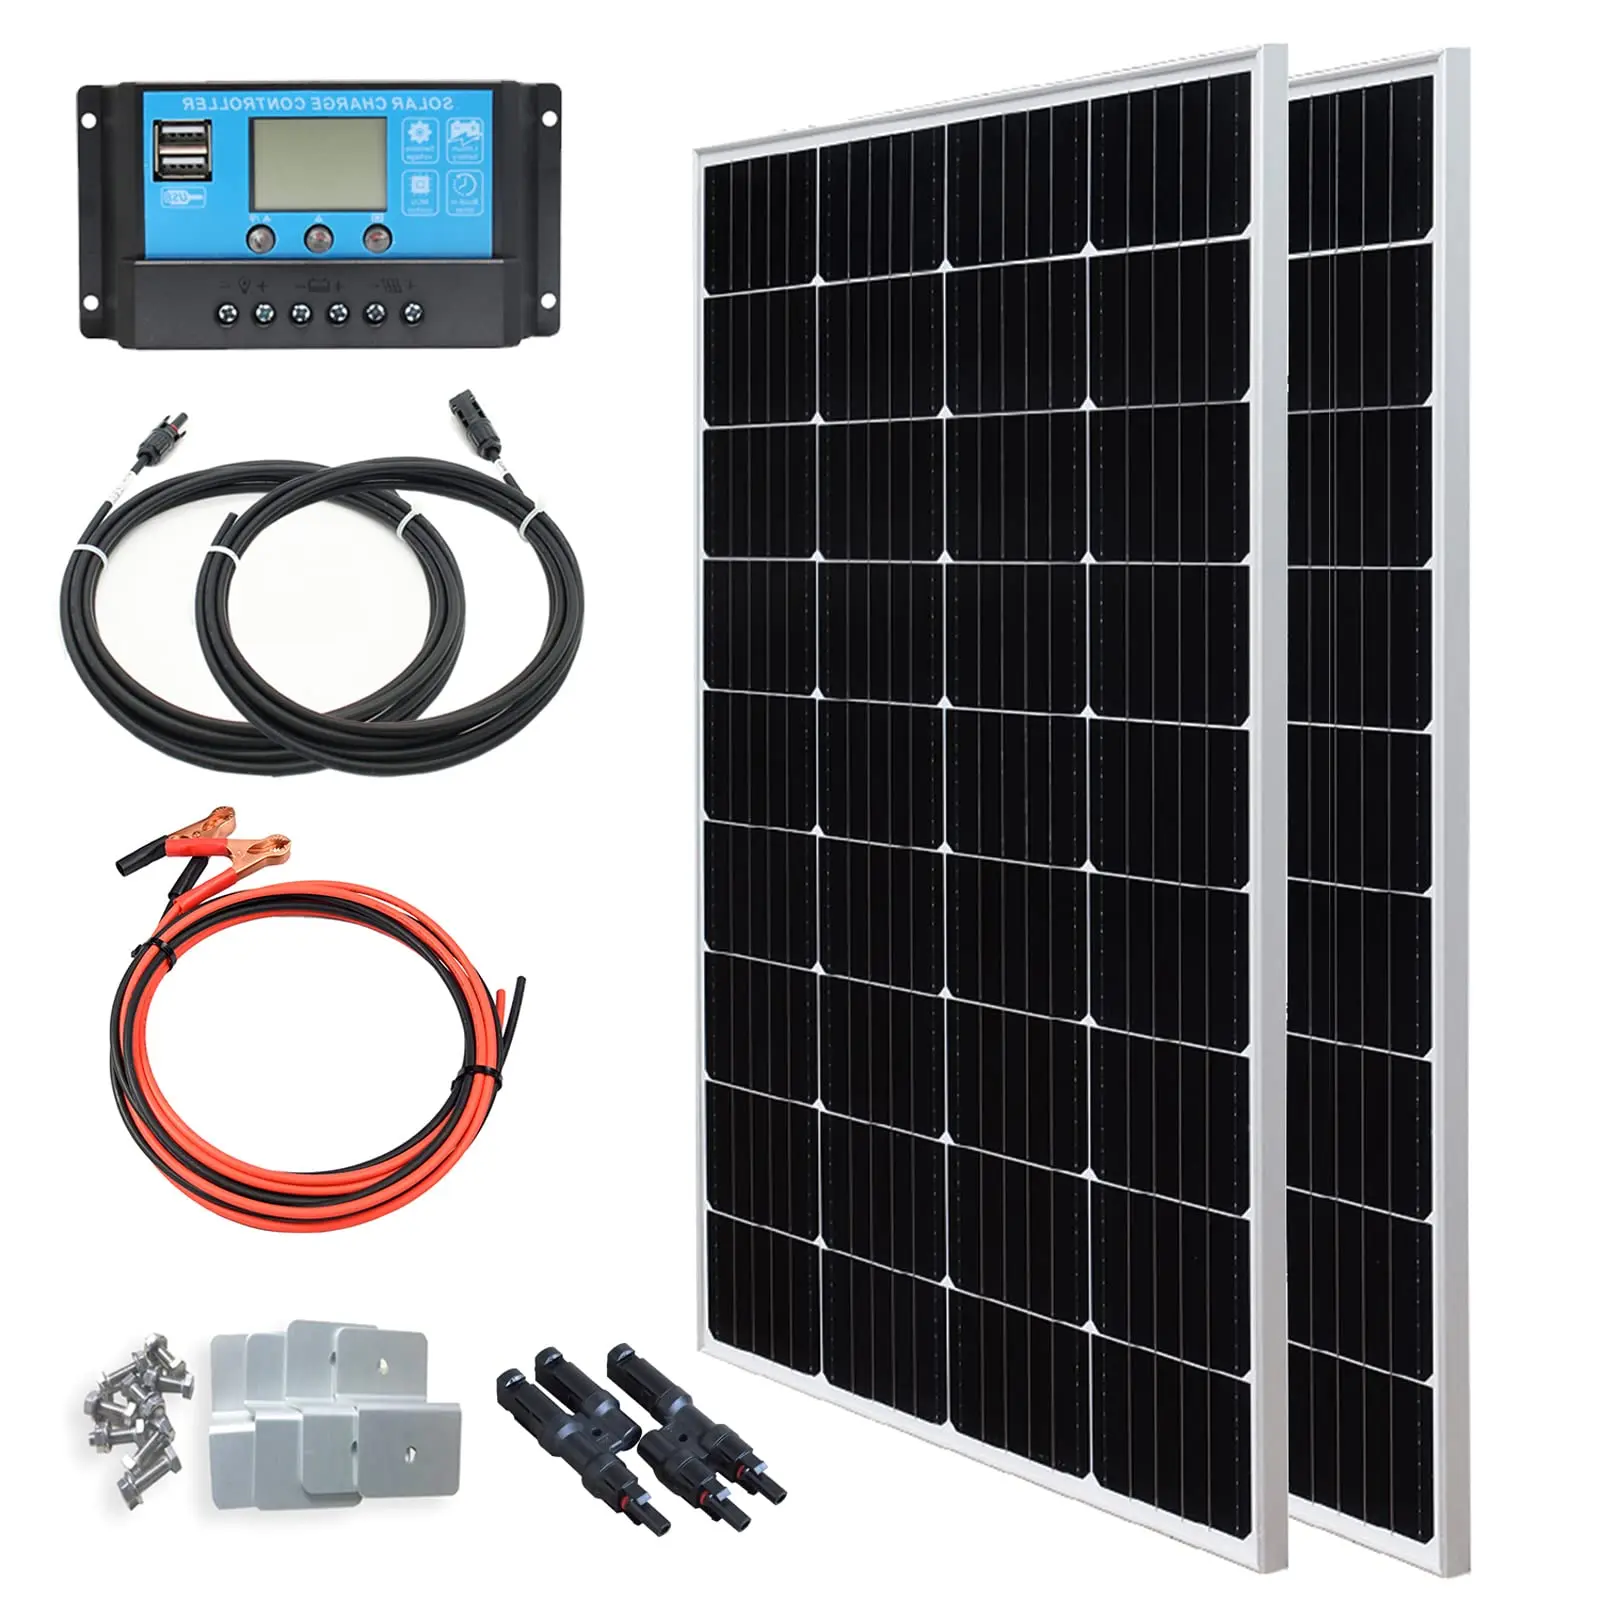 300 watt solar panel prices - What can a 300 watt solar panel run